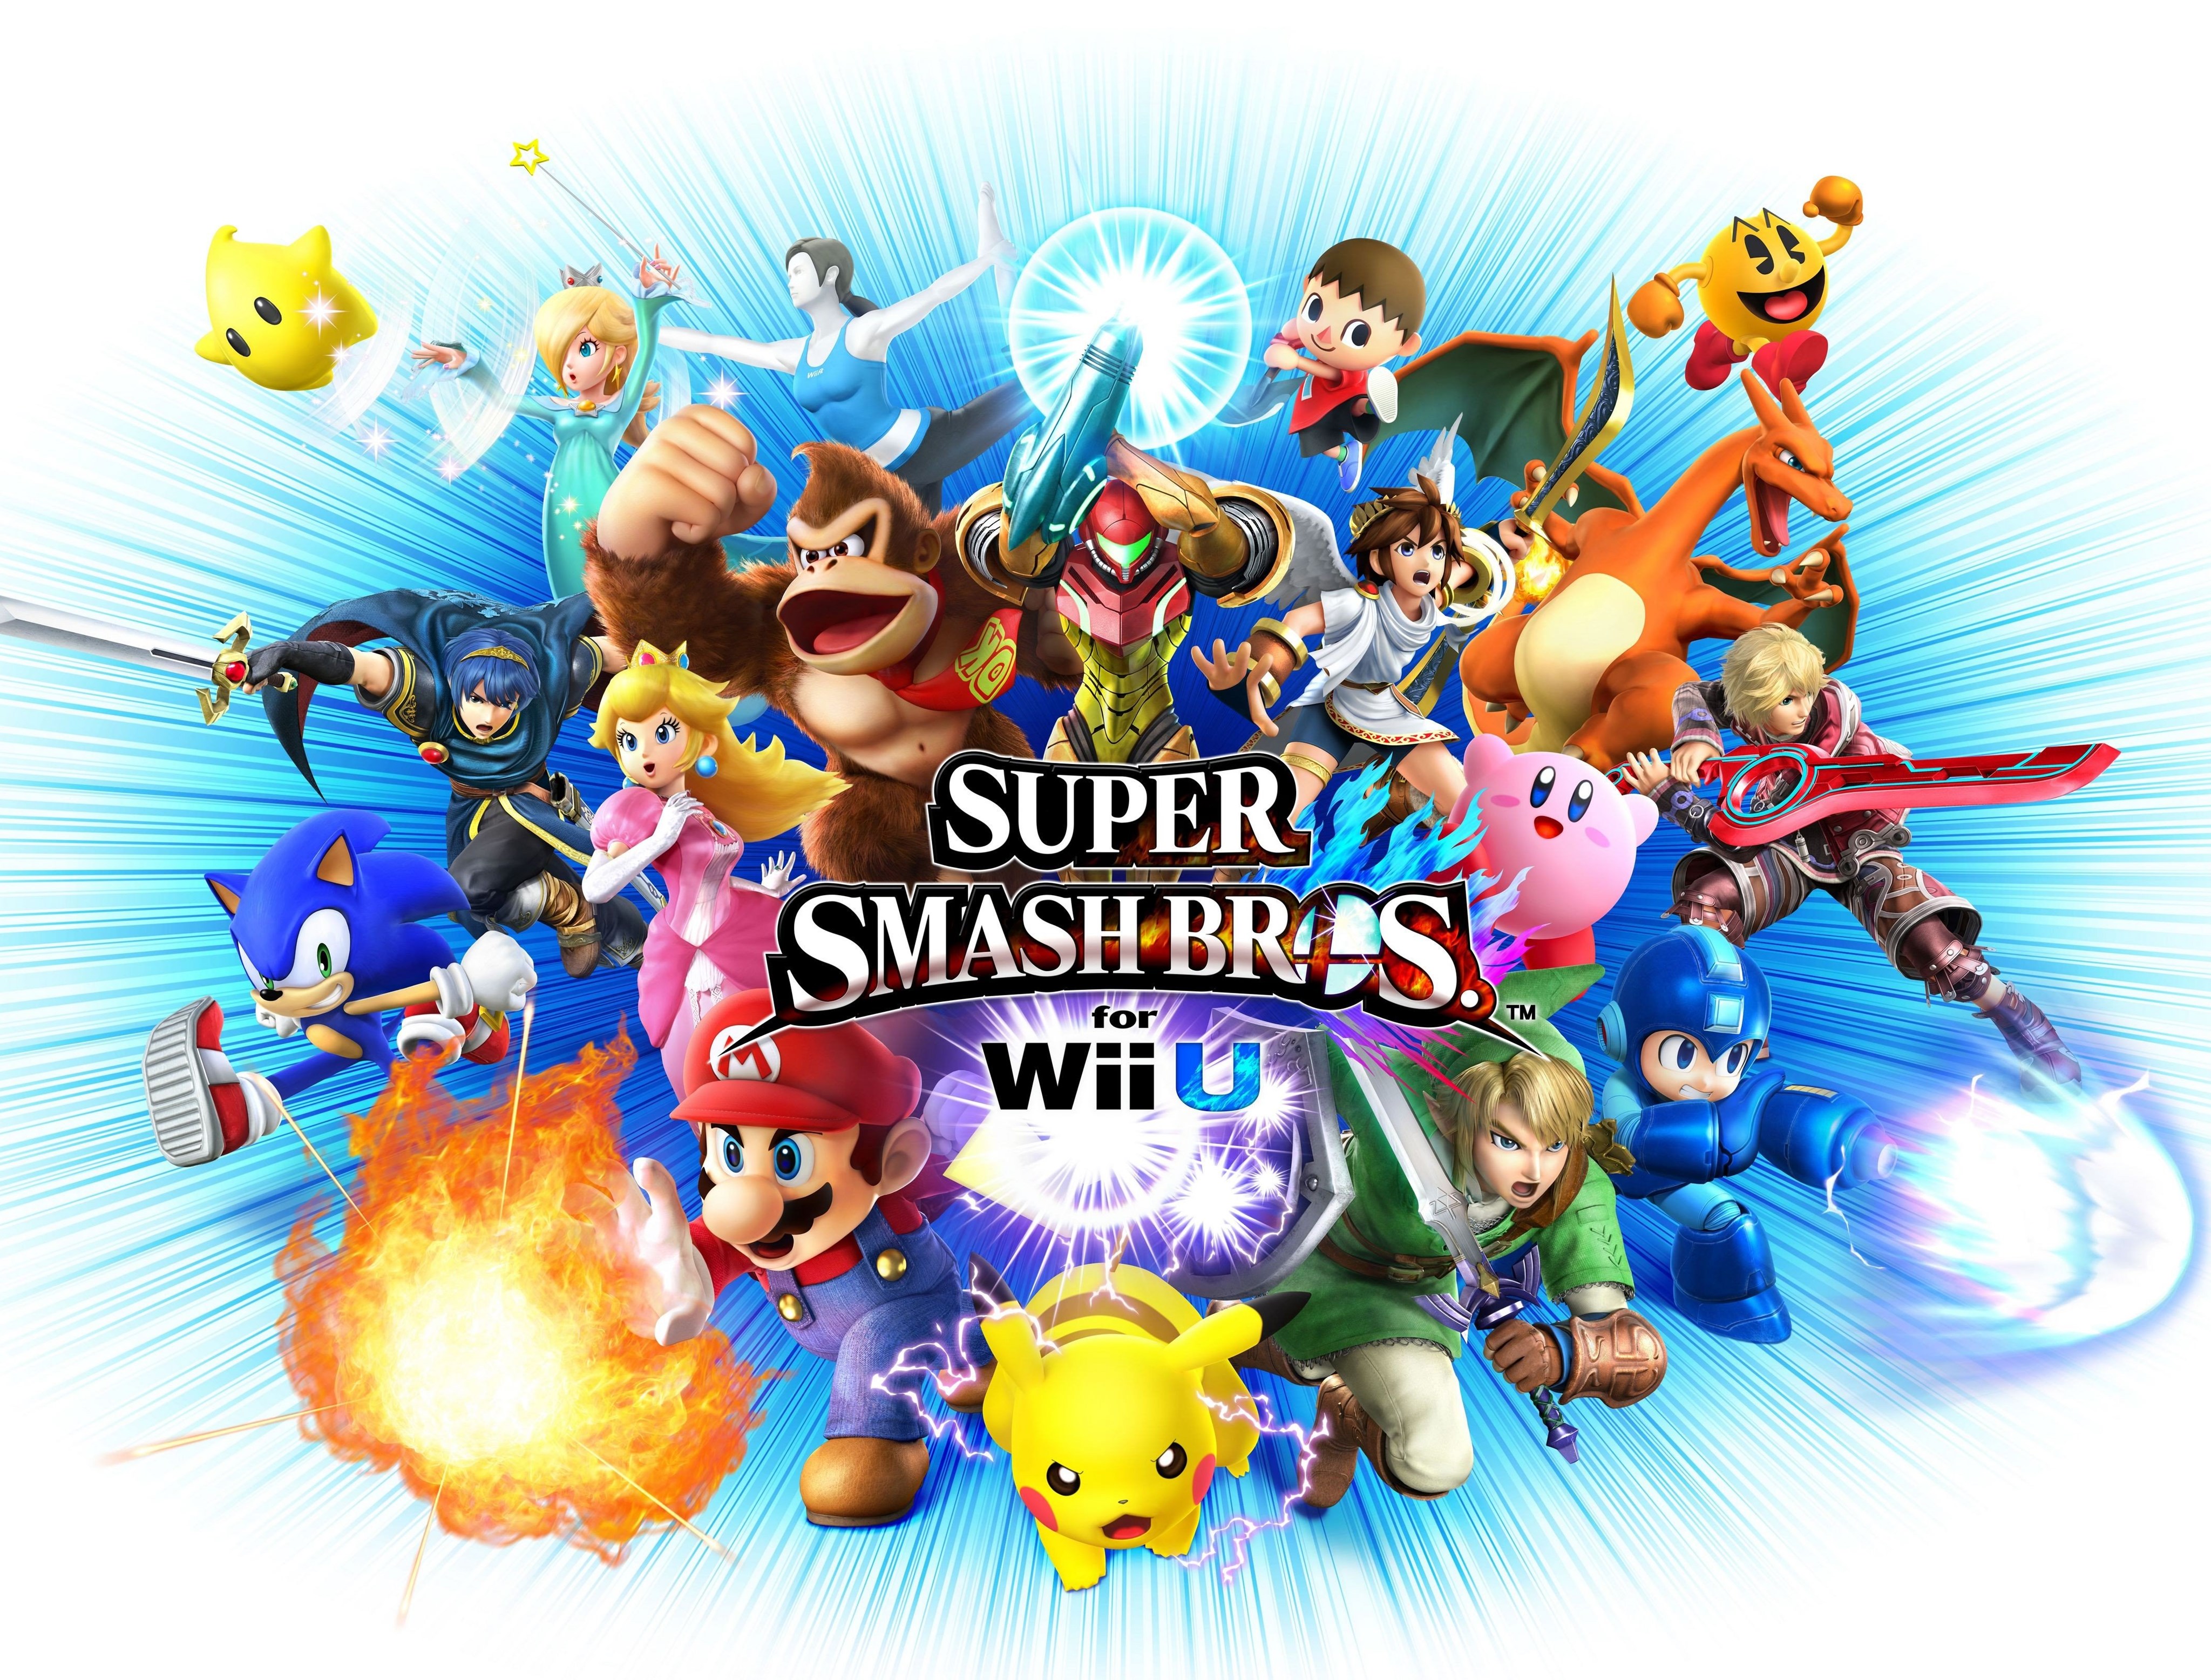 Super smash bros игра. Супер смэш БРОС для Нинтендо 3дс. Smash Bros Wii. Super Smash Bros. Для Nintendo 3ds и Wii u. Mario super Smash Bros Wii.